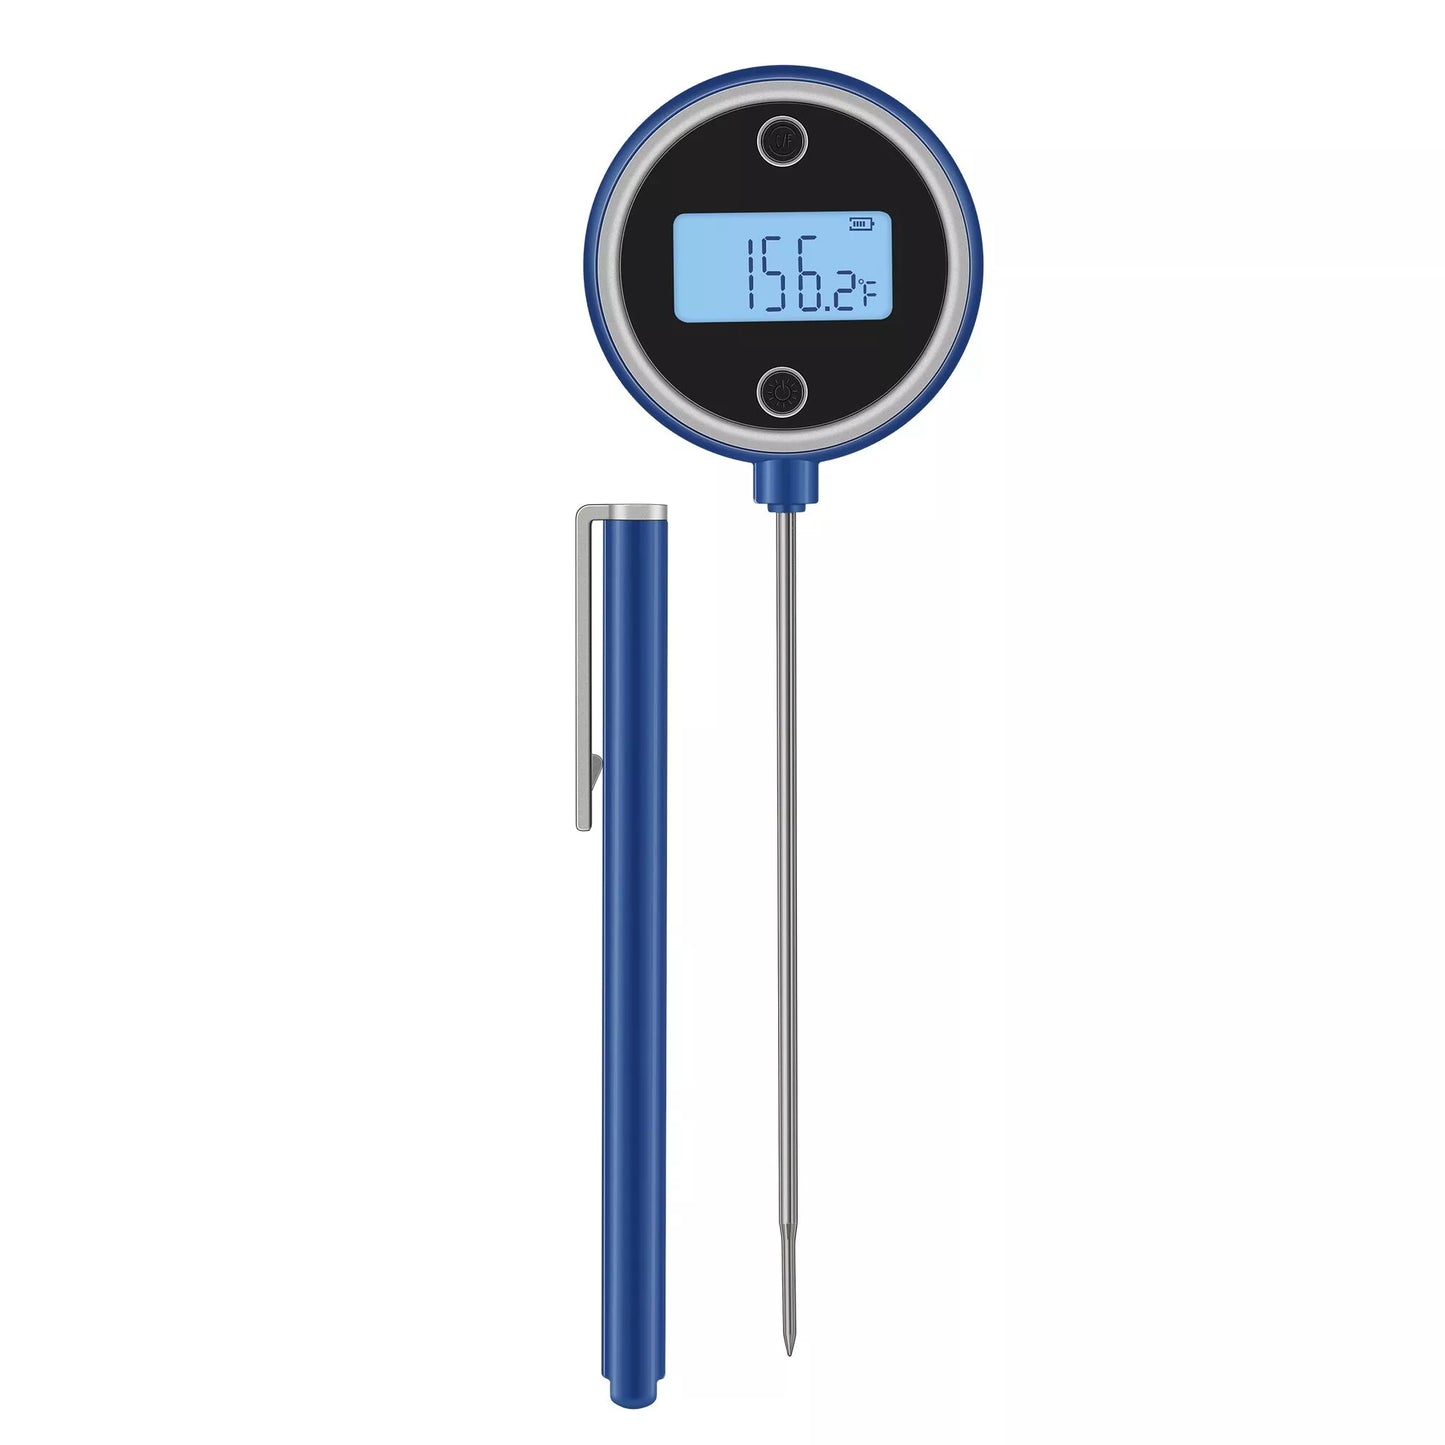 ChefsTemp Pocket Pro Digital Thermometer